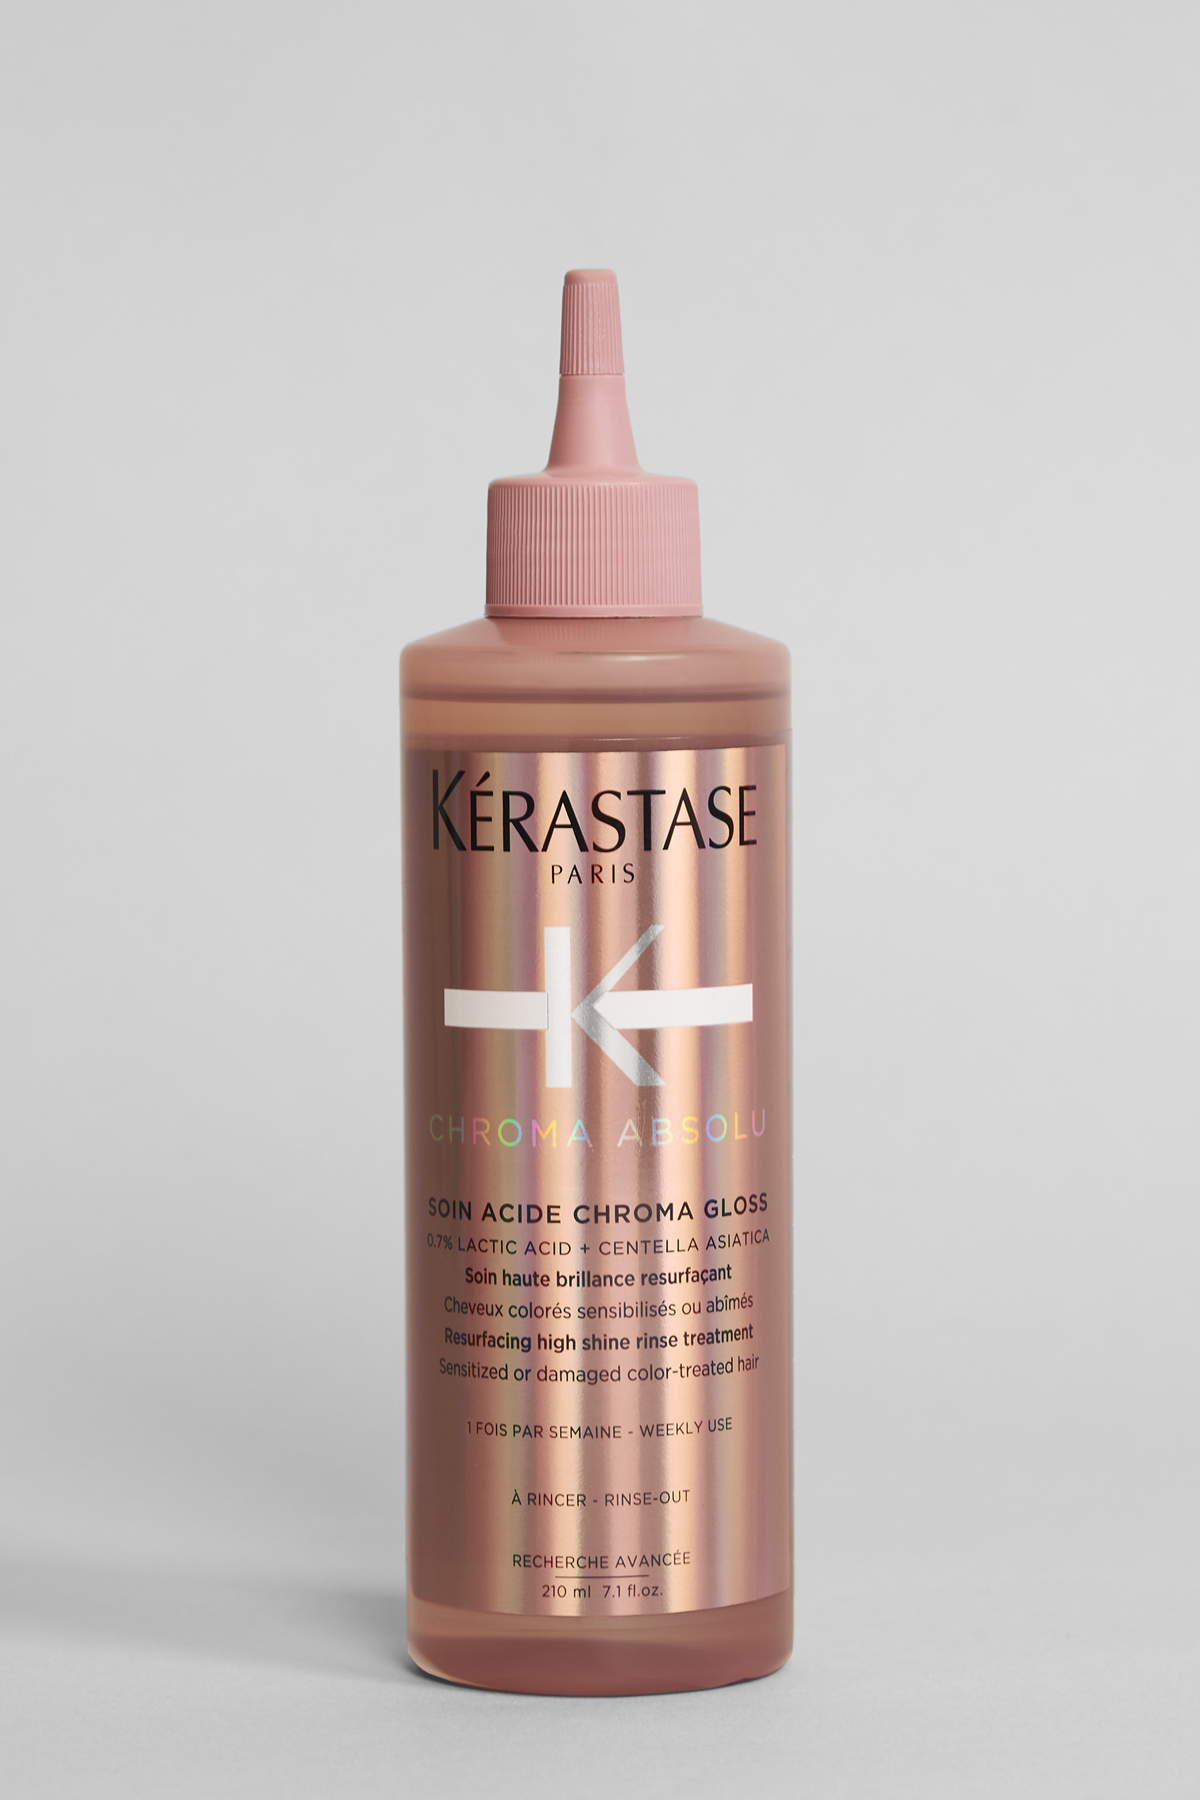 Kérastase Chroma Absolu High Shine Gloss Treatment for Color-Treated Hair shot in Marie Claire